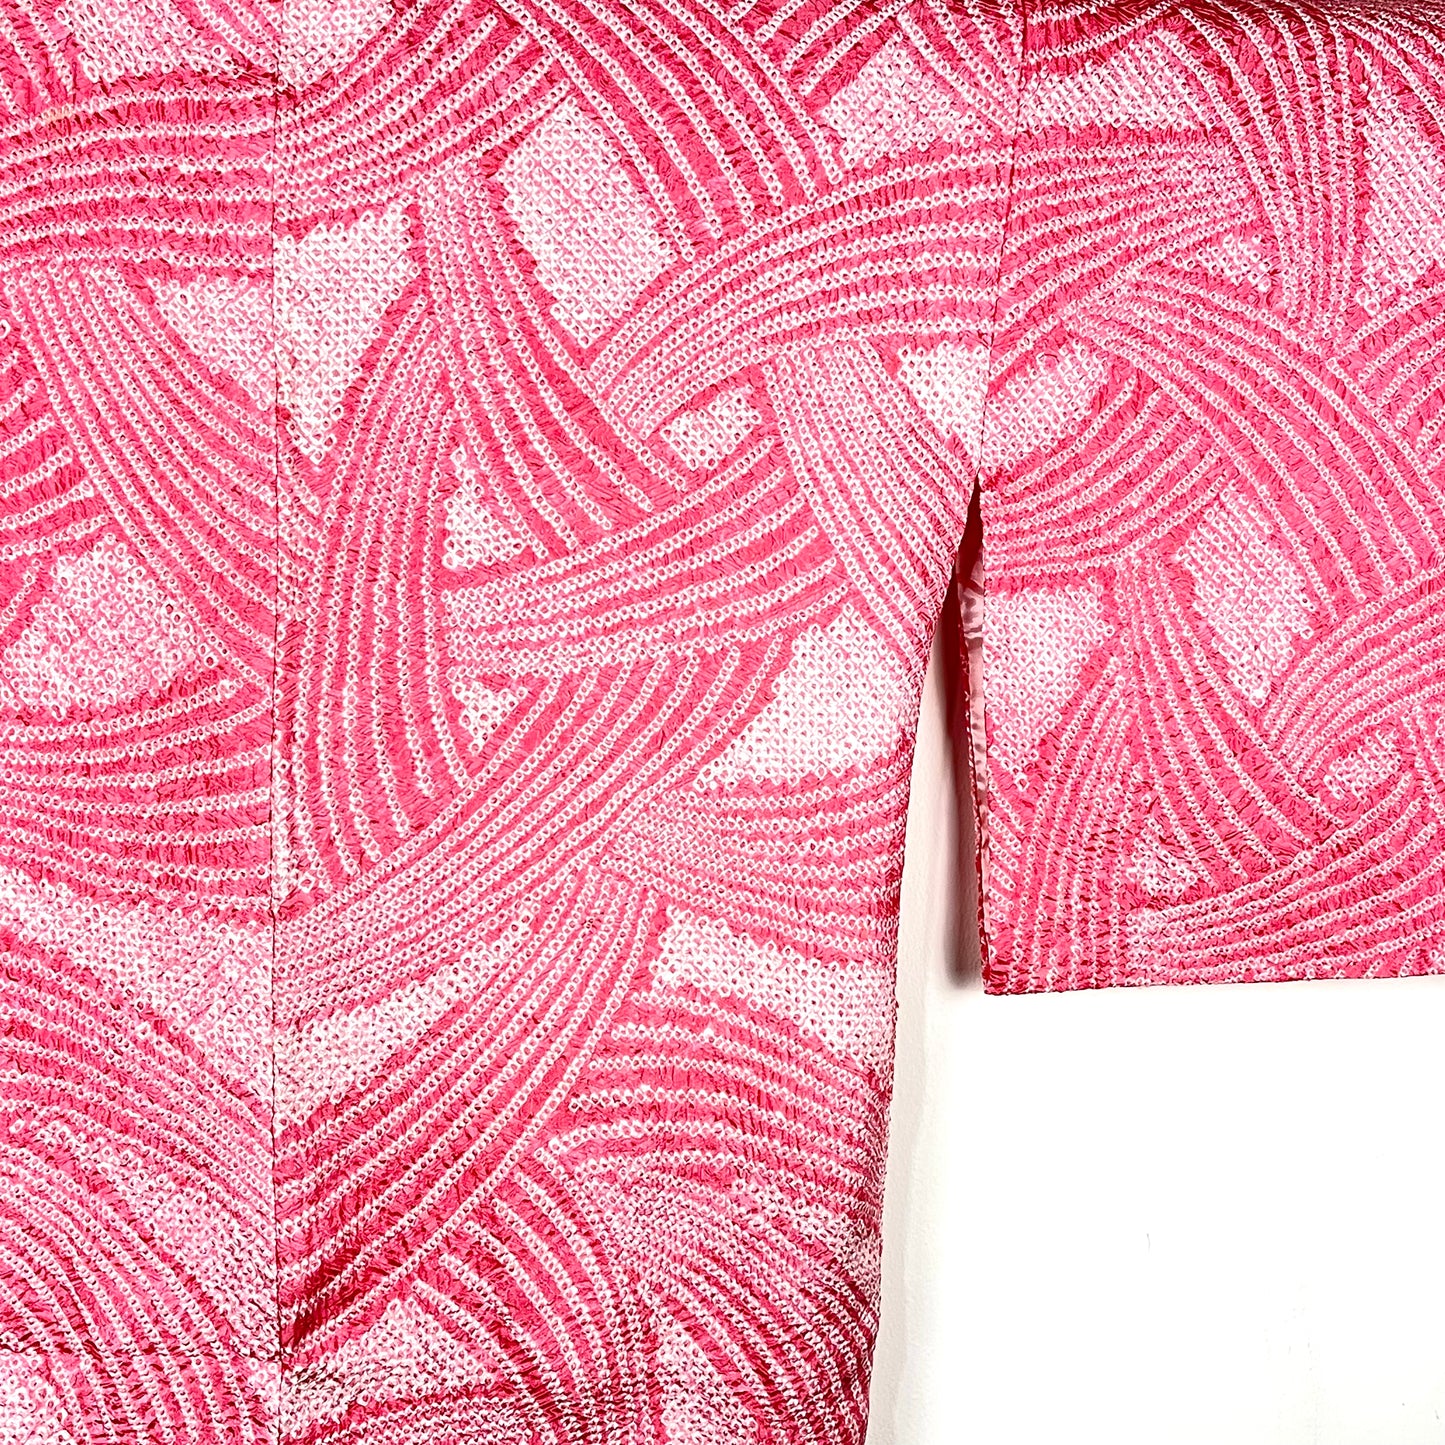 Vintage Japanese Silk Haori Coat in Shibori Tie-dye Pink Weave pattern 28"L